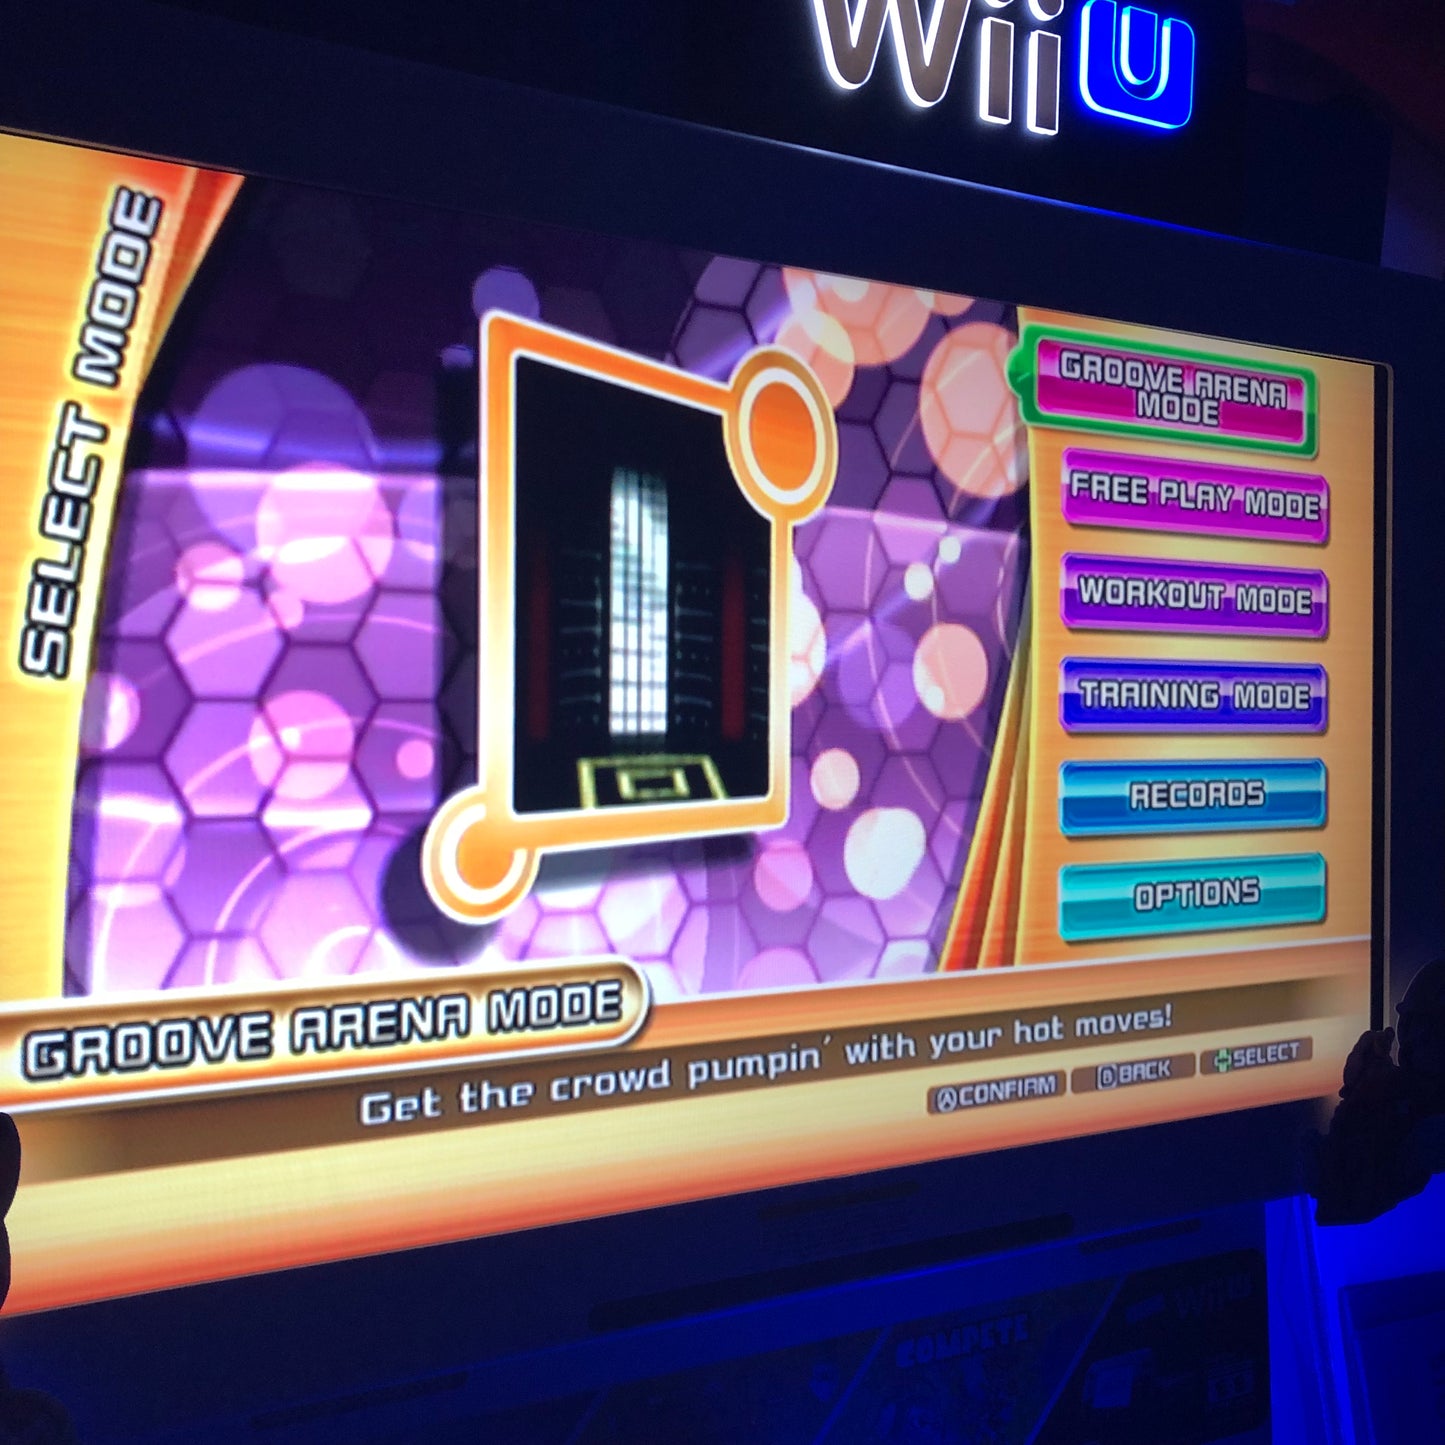 Wii - Dance Dance Revolution Hottest Party 2 Mat Bundle Nintendo Complete #2812